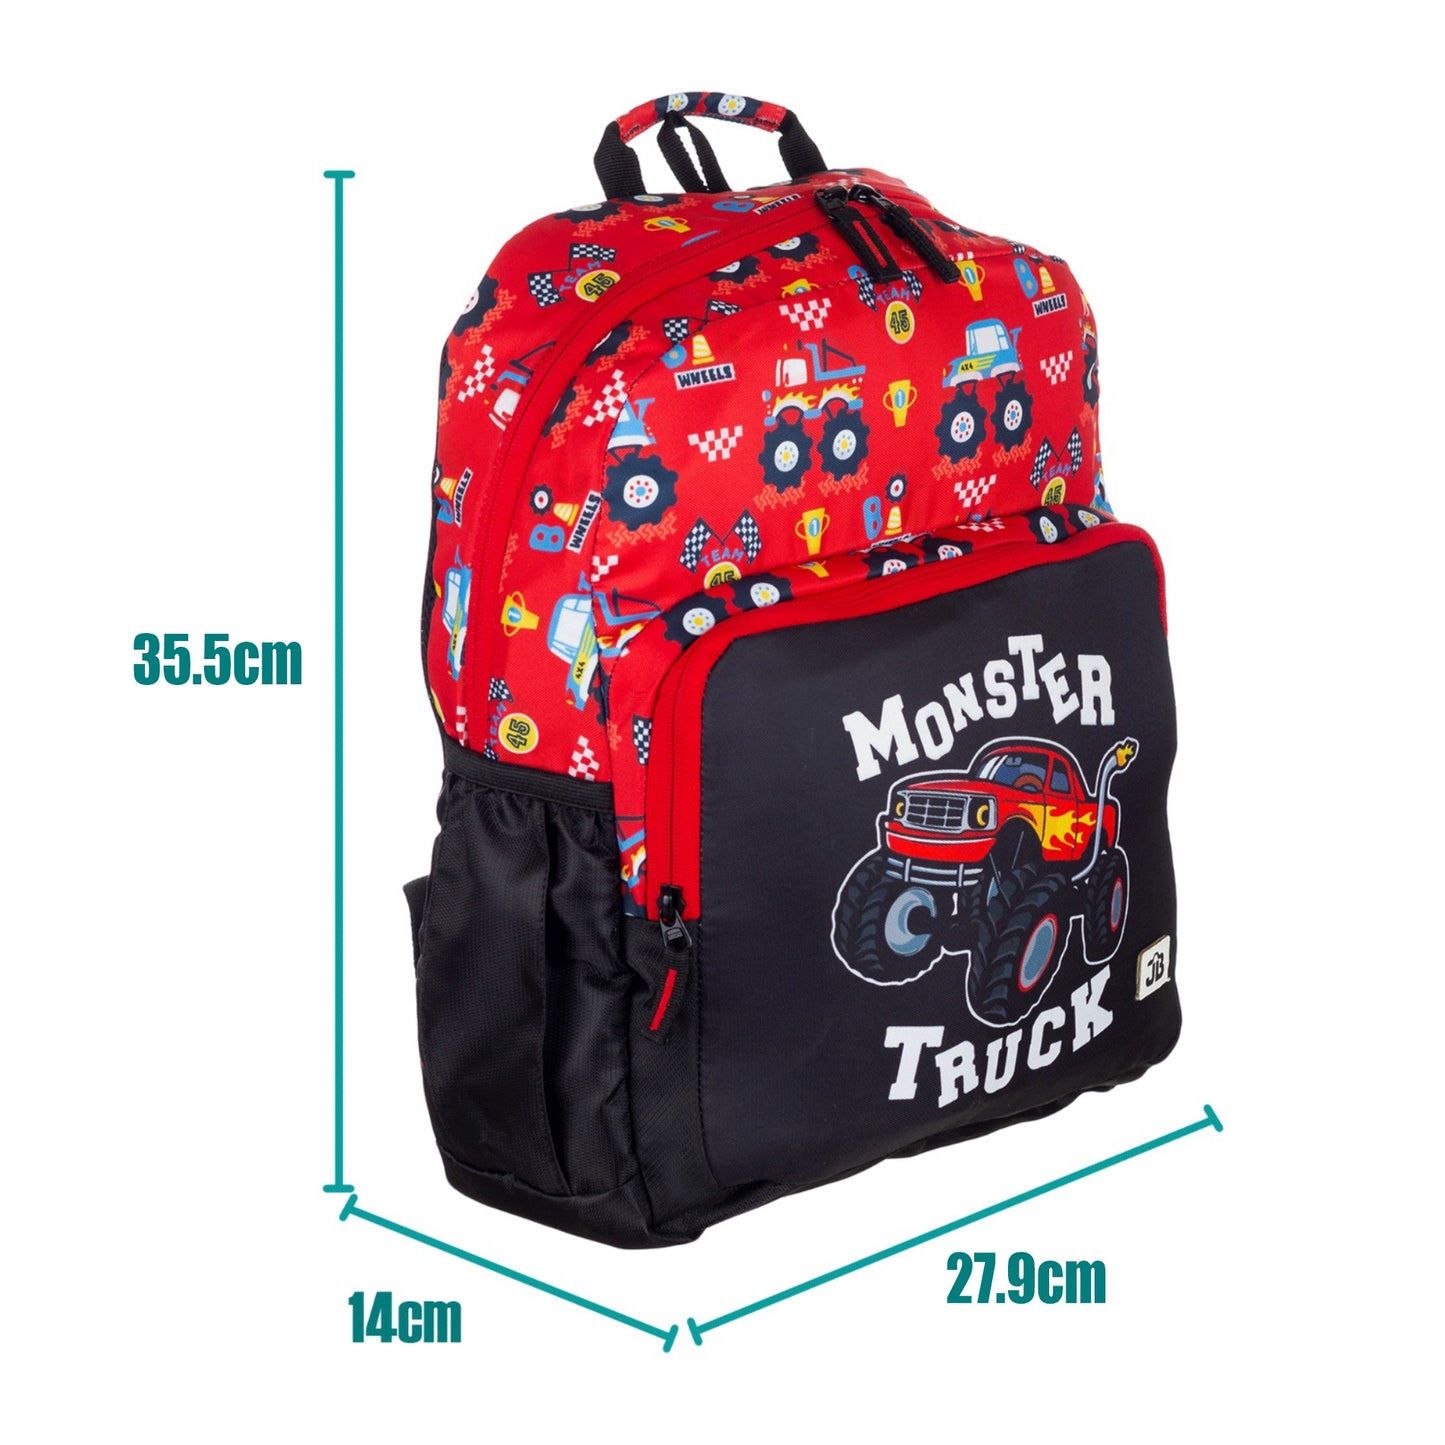 Monster Truck School Backpack- Red & Black